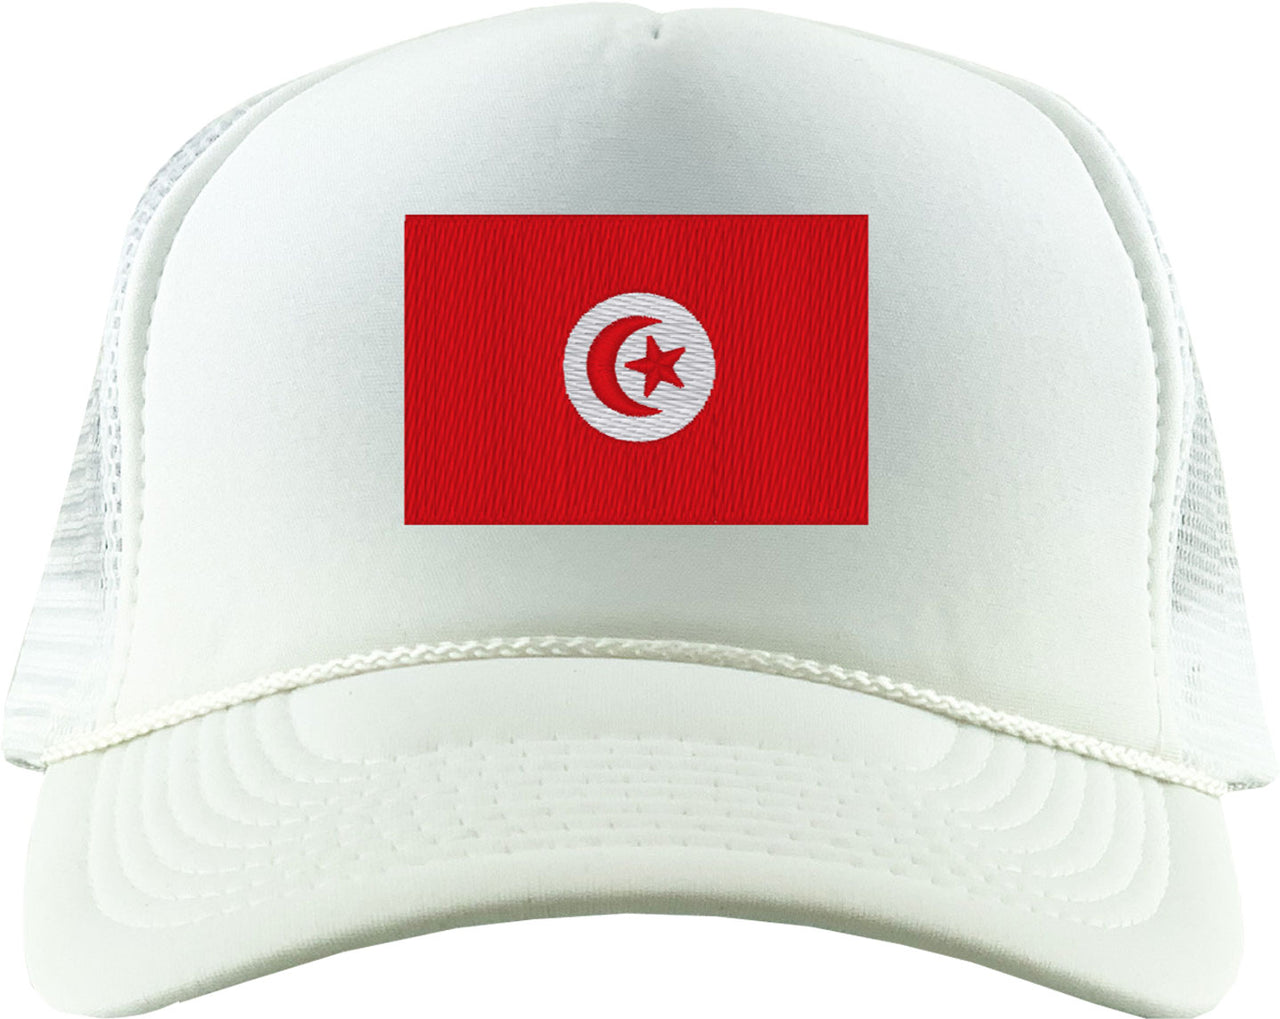 Tunisia Flag Foam Trucker Hat